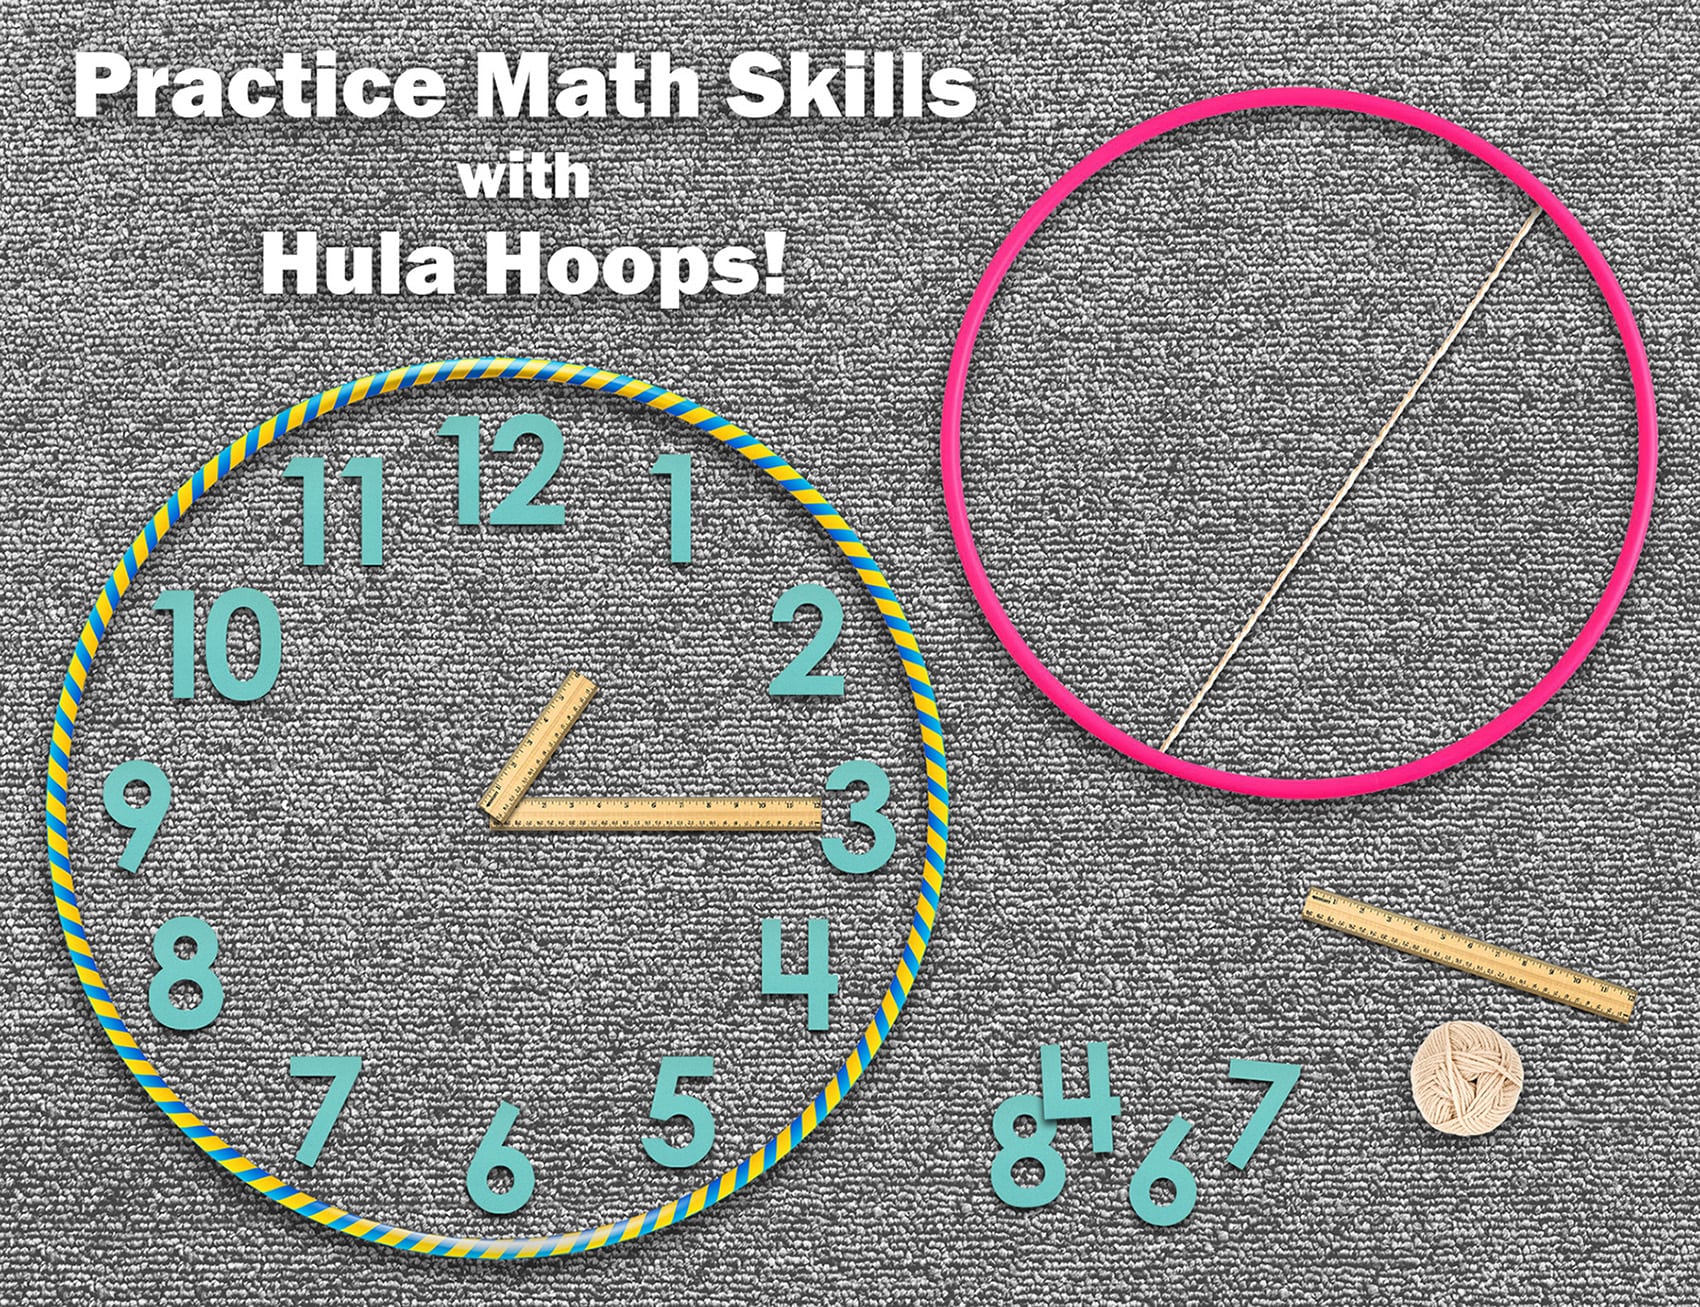 Hula Hoop Math Skills